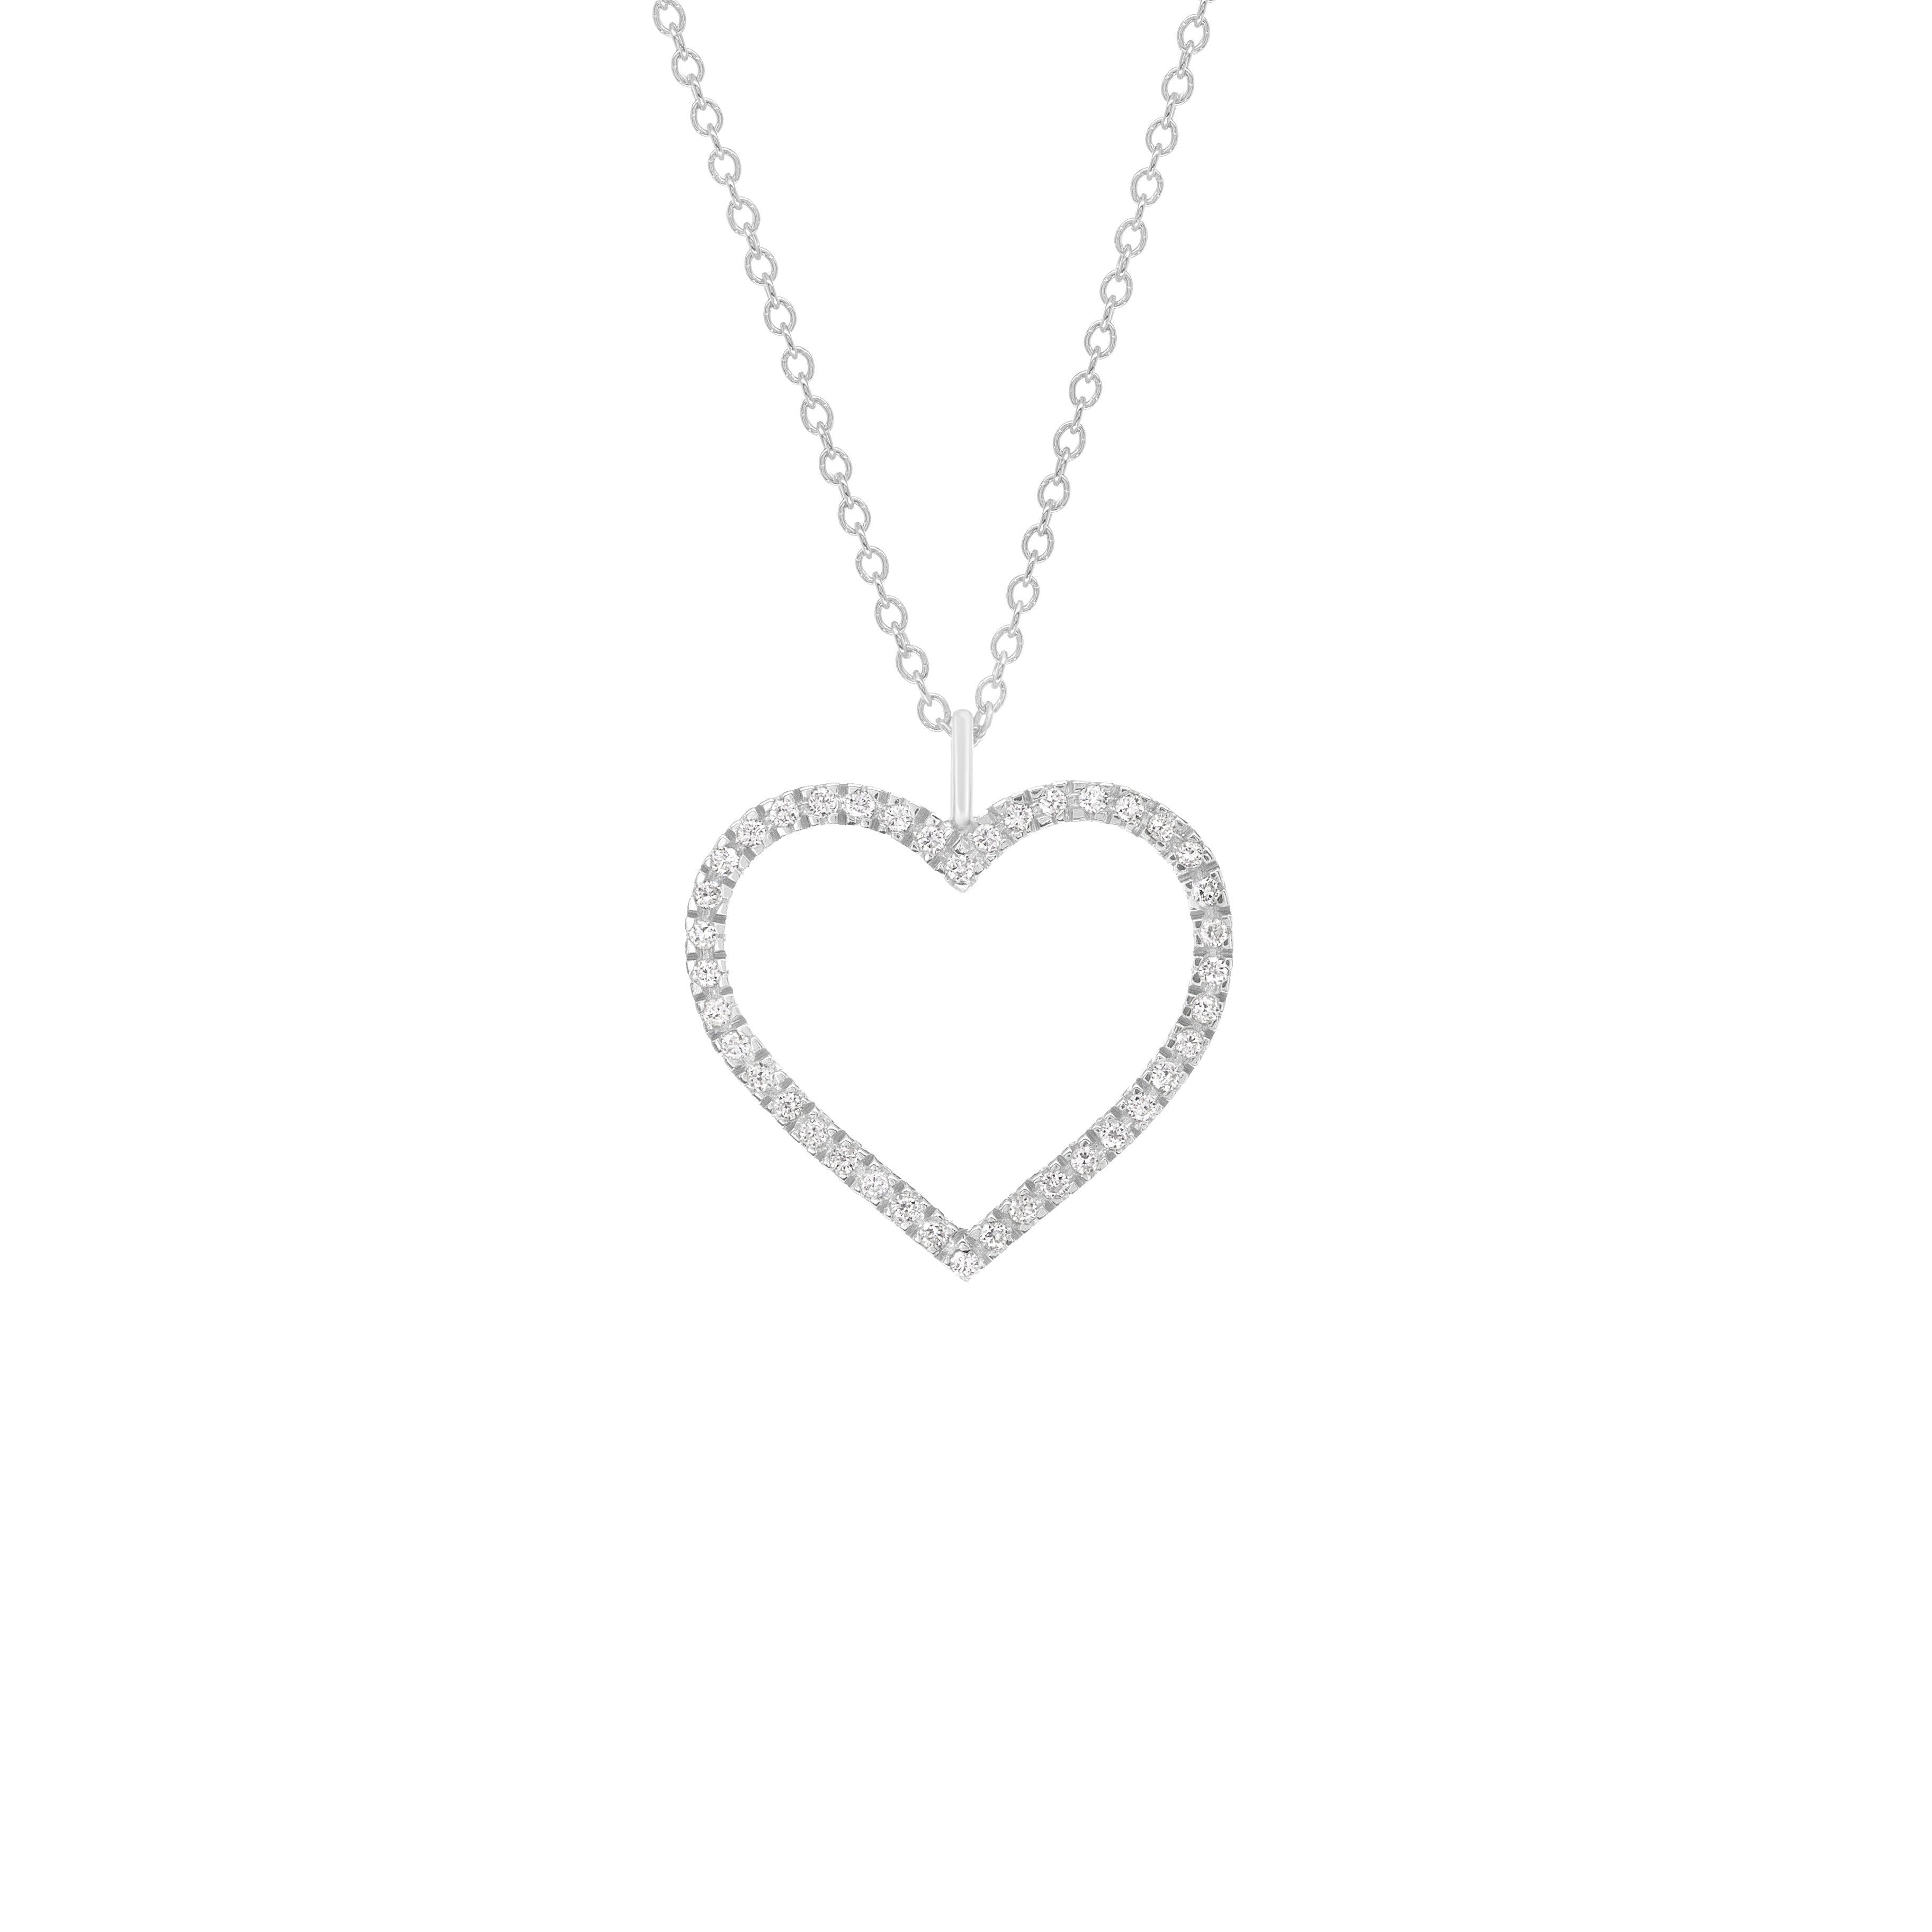 White Gold Heart Romantic Diamond Necklace Handmade- Large